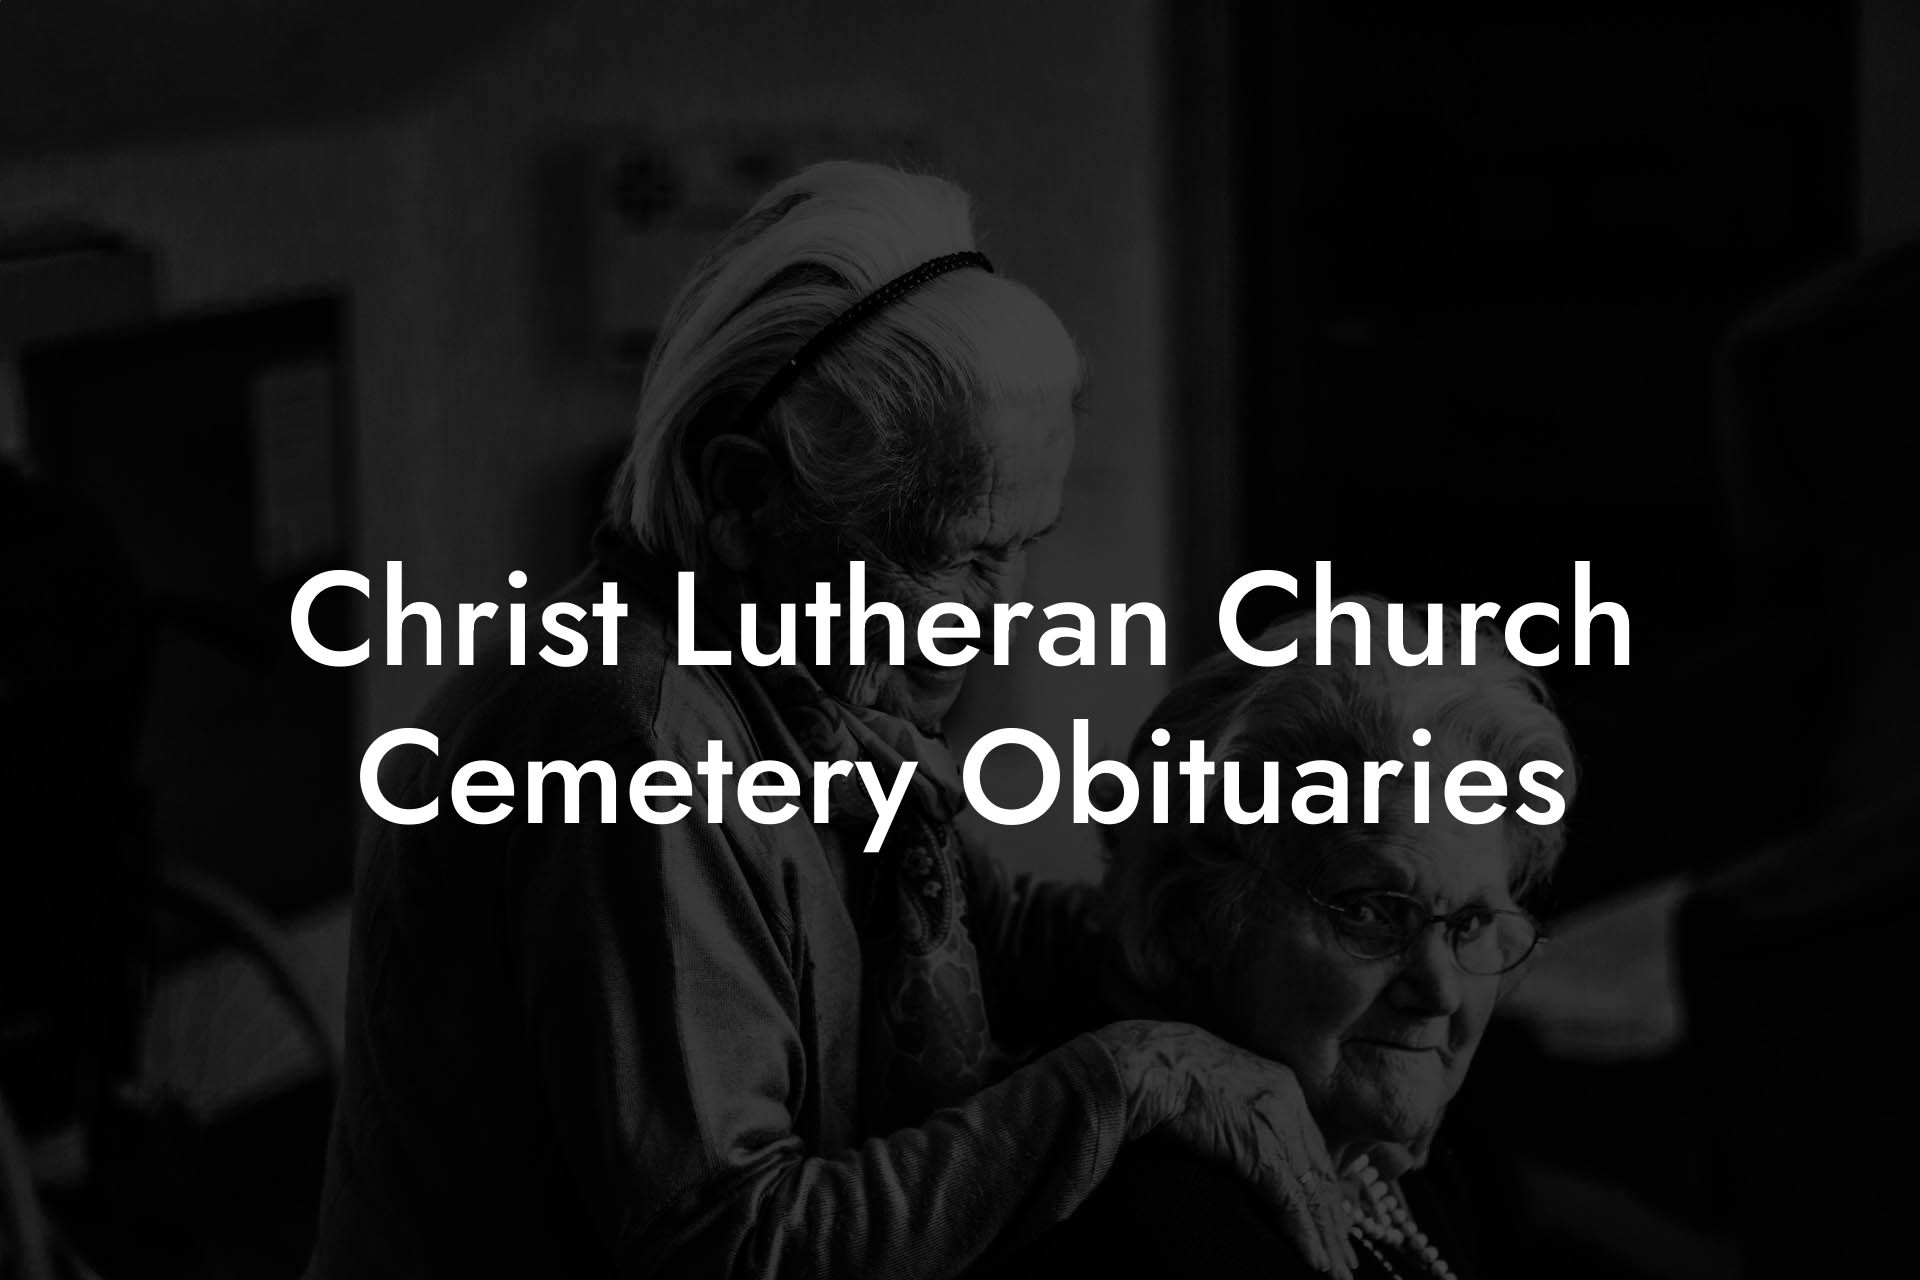 Christ Lutheran Church Cemetery Obituaries